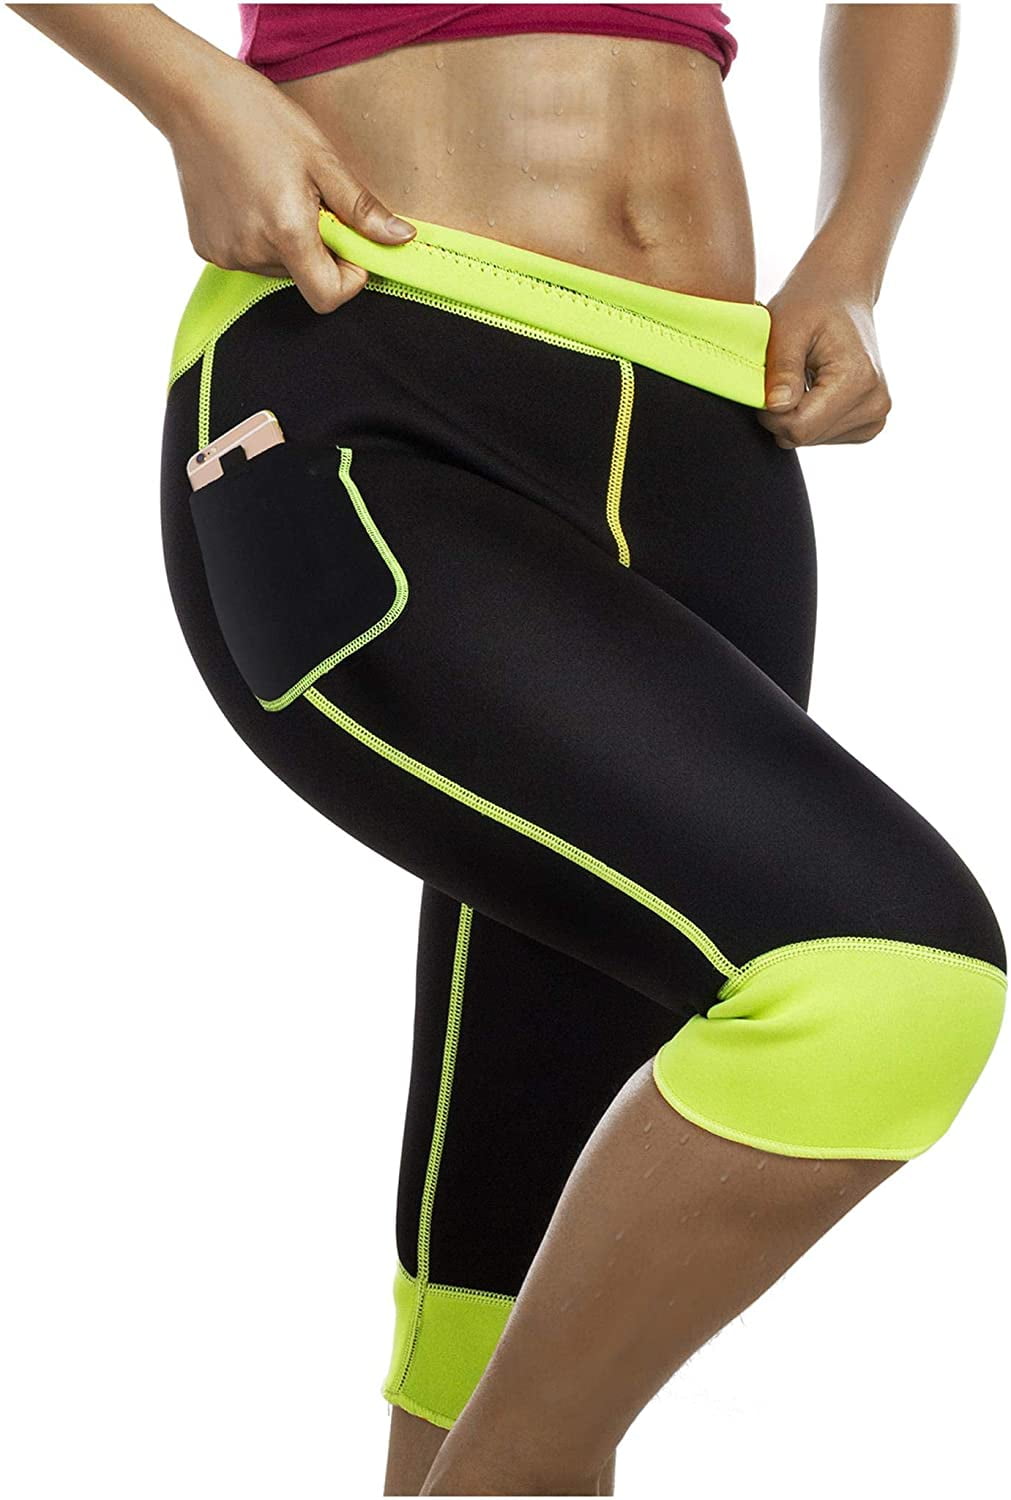 Women Hot Neoprene Sauna Sweat Pants with Pocket Workout Running Slimming Shorts Capris Compression Leggings Body Shaper